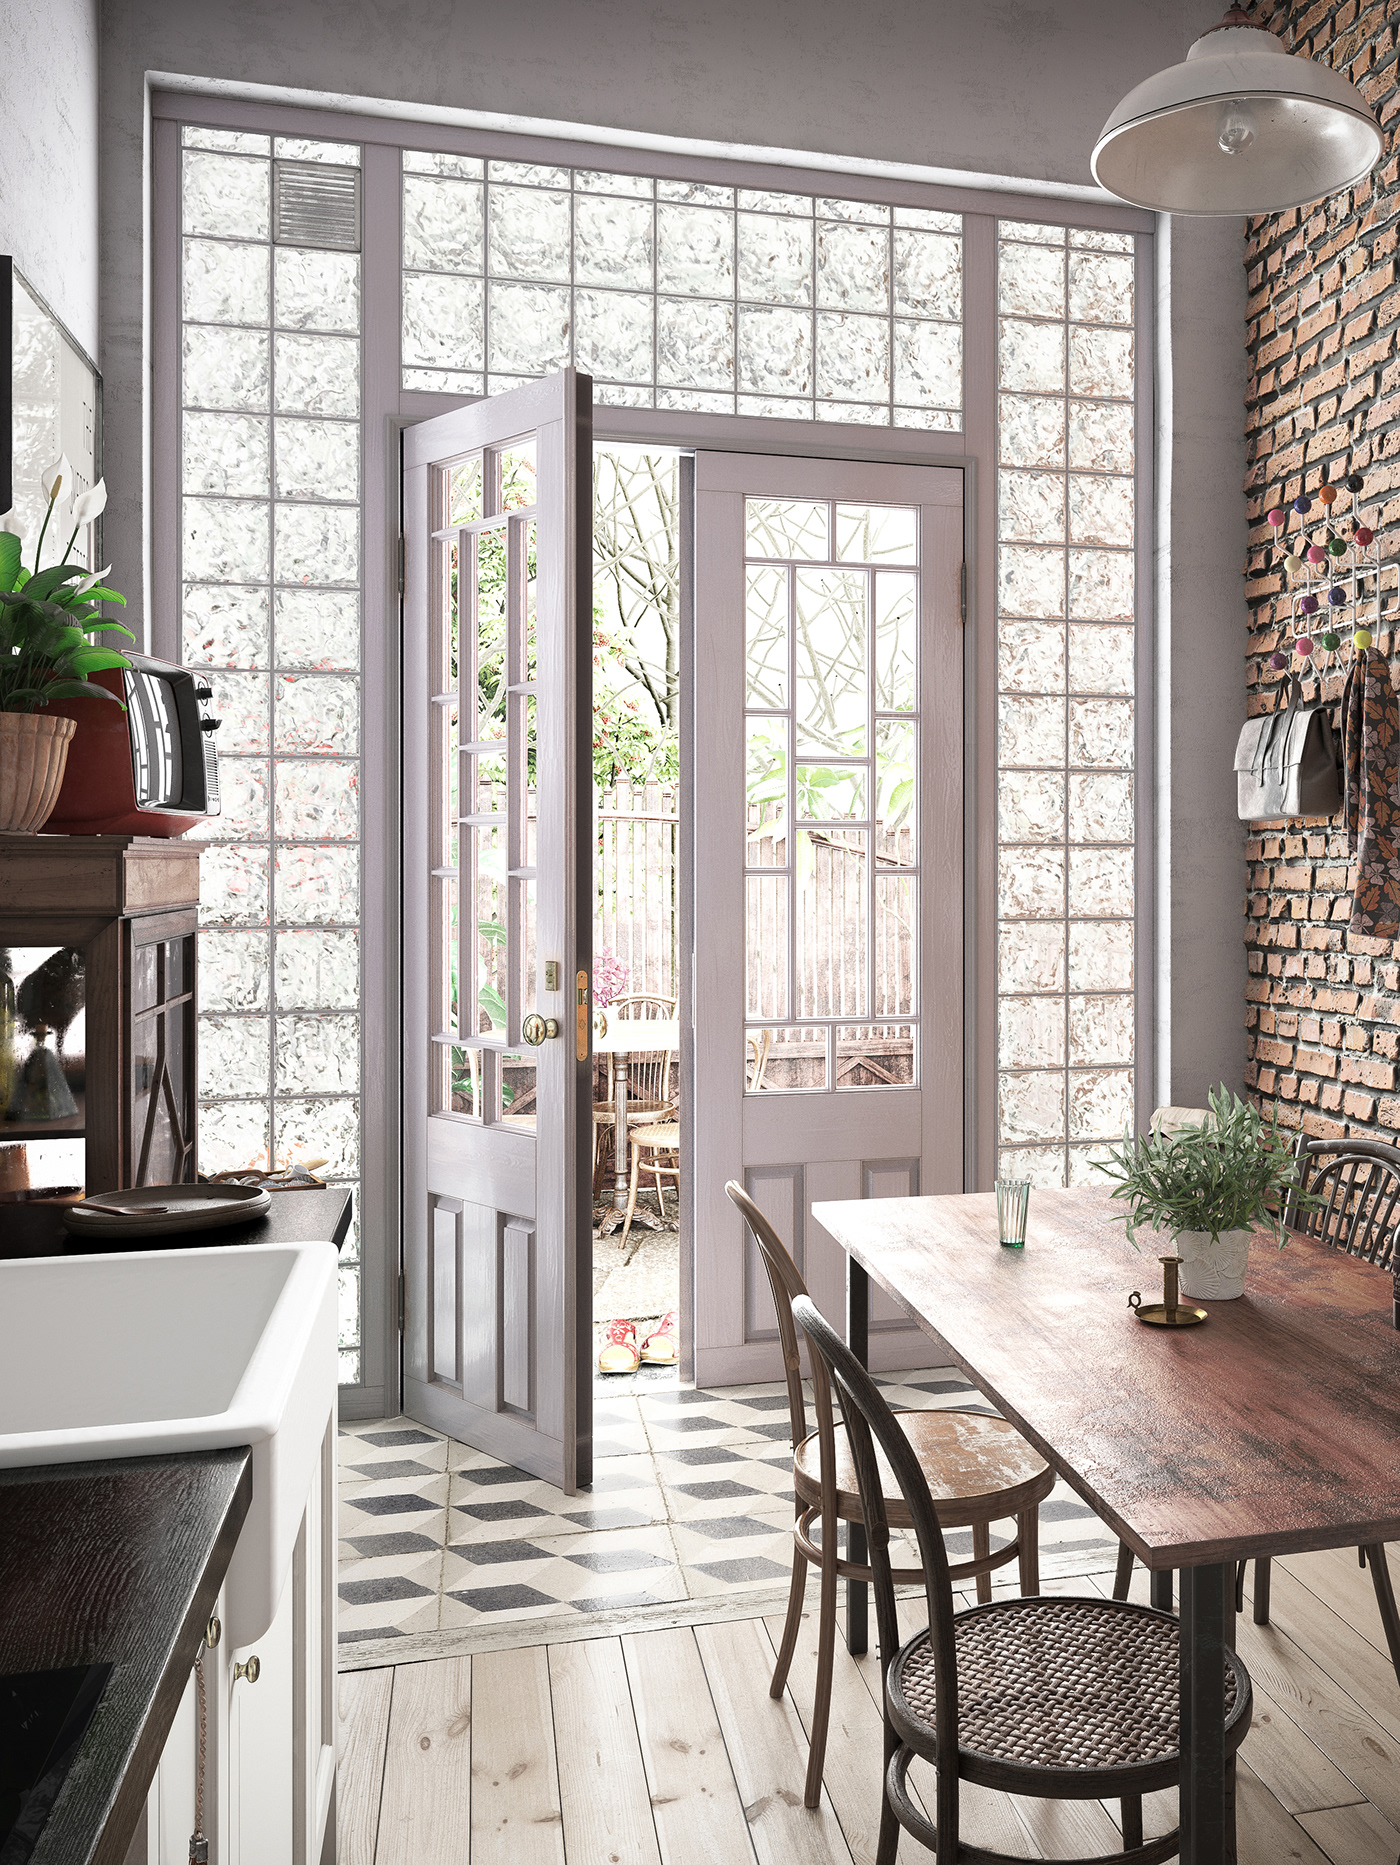 3D 3dsmax cuisine Interior kitchen light realistic Render vray design